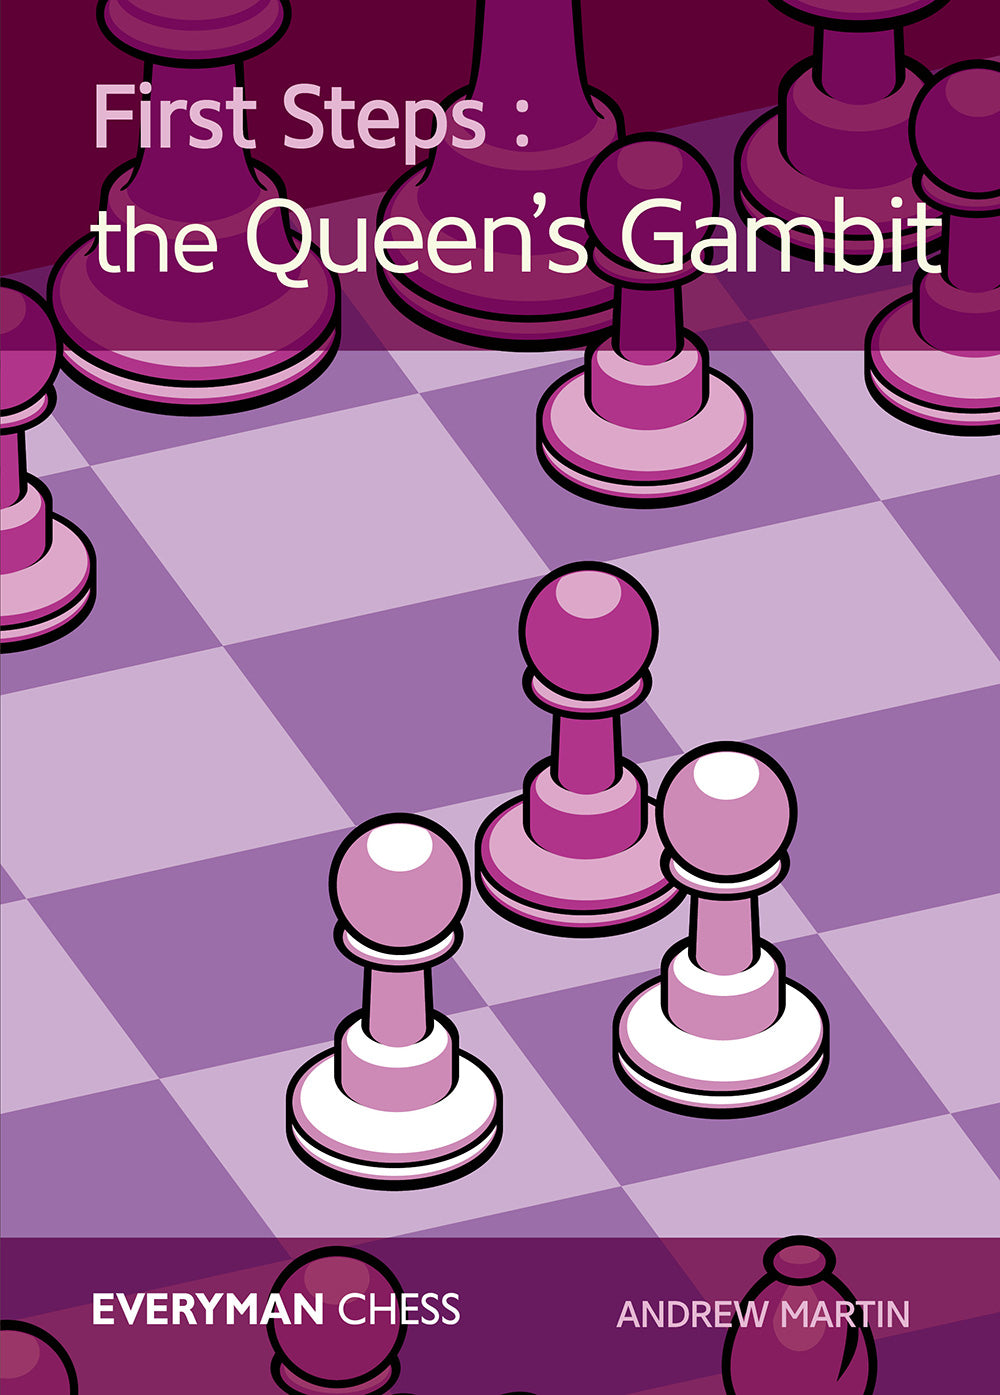 Buy Queen's Gambit Apple Watch Band Chess Theme Apple Watch Online in India  